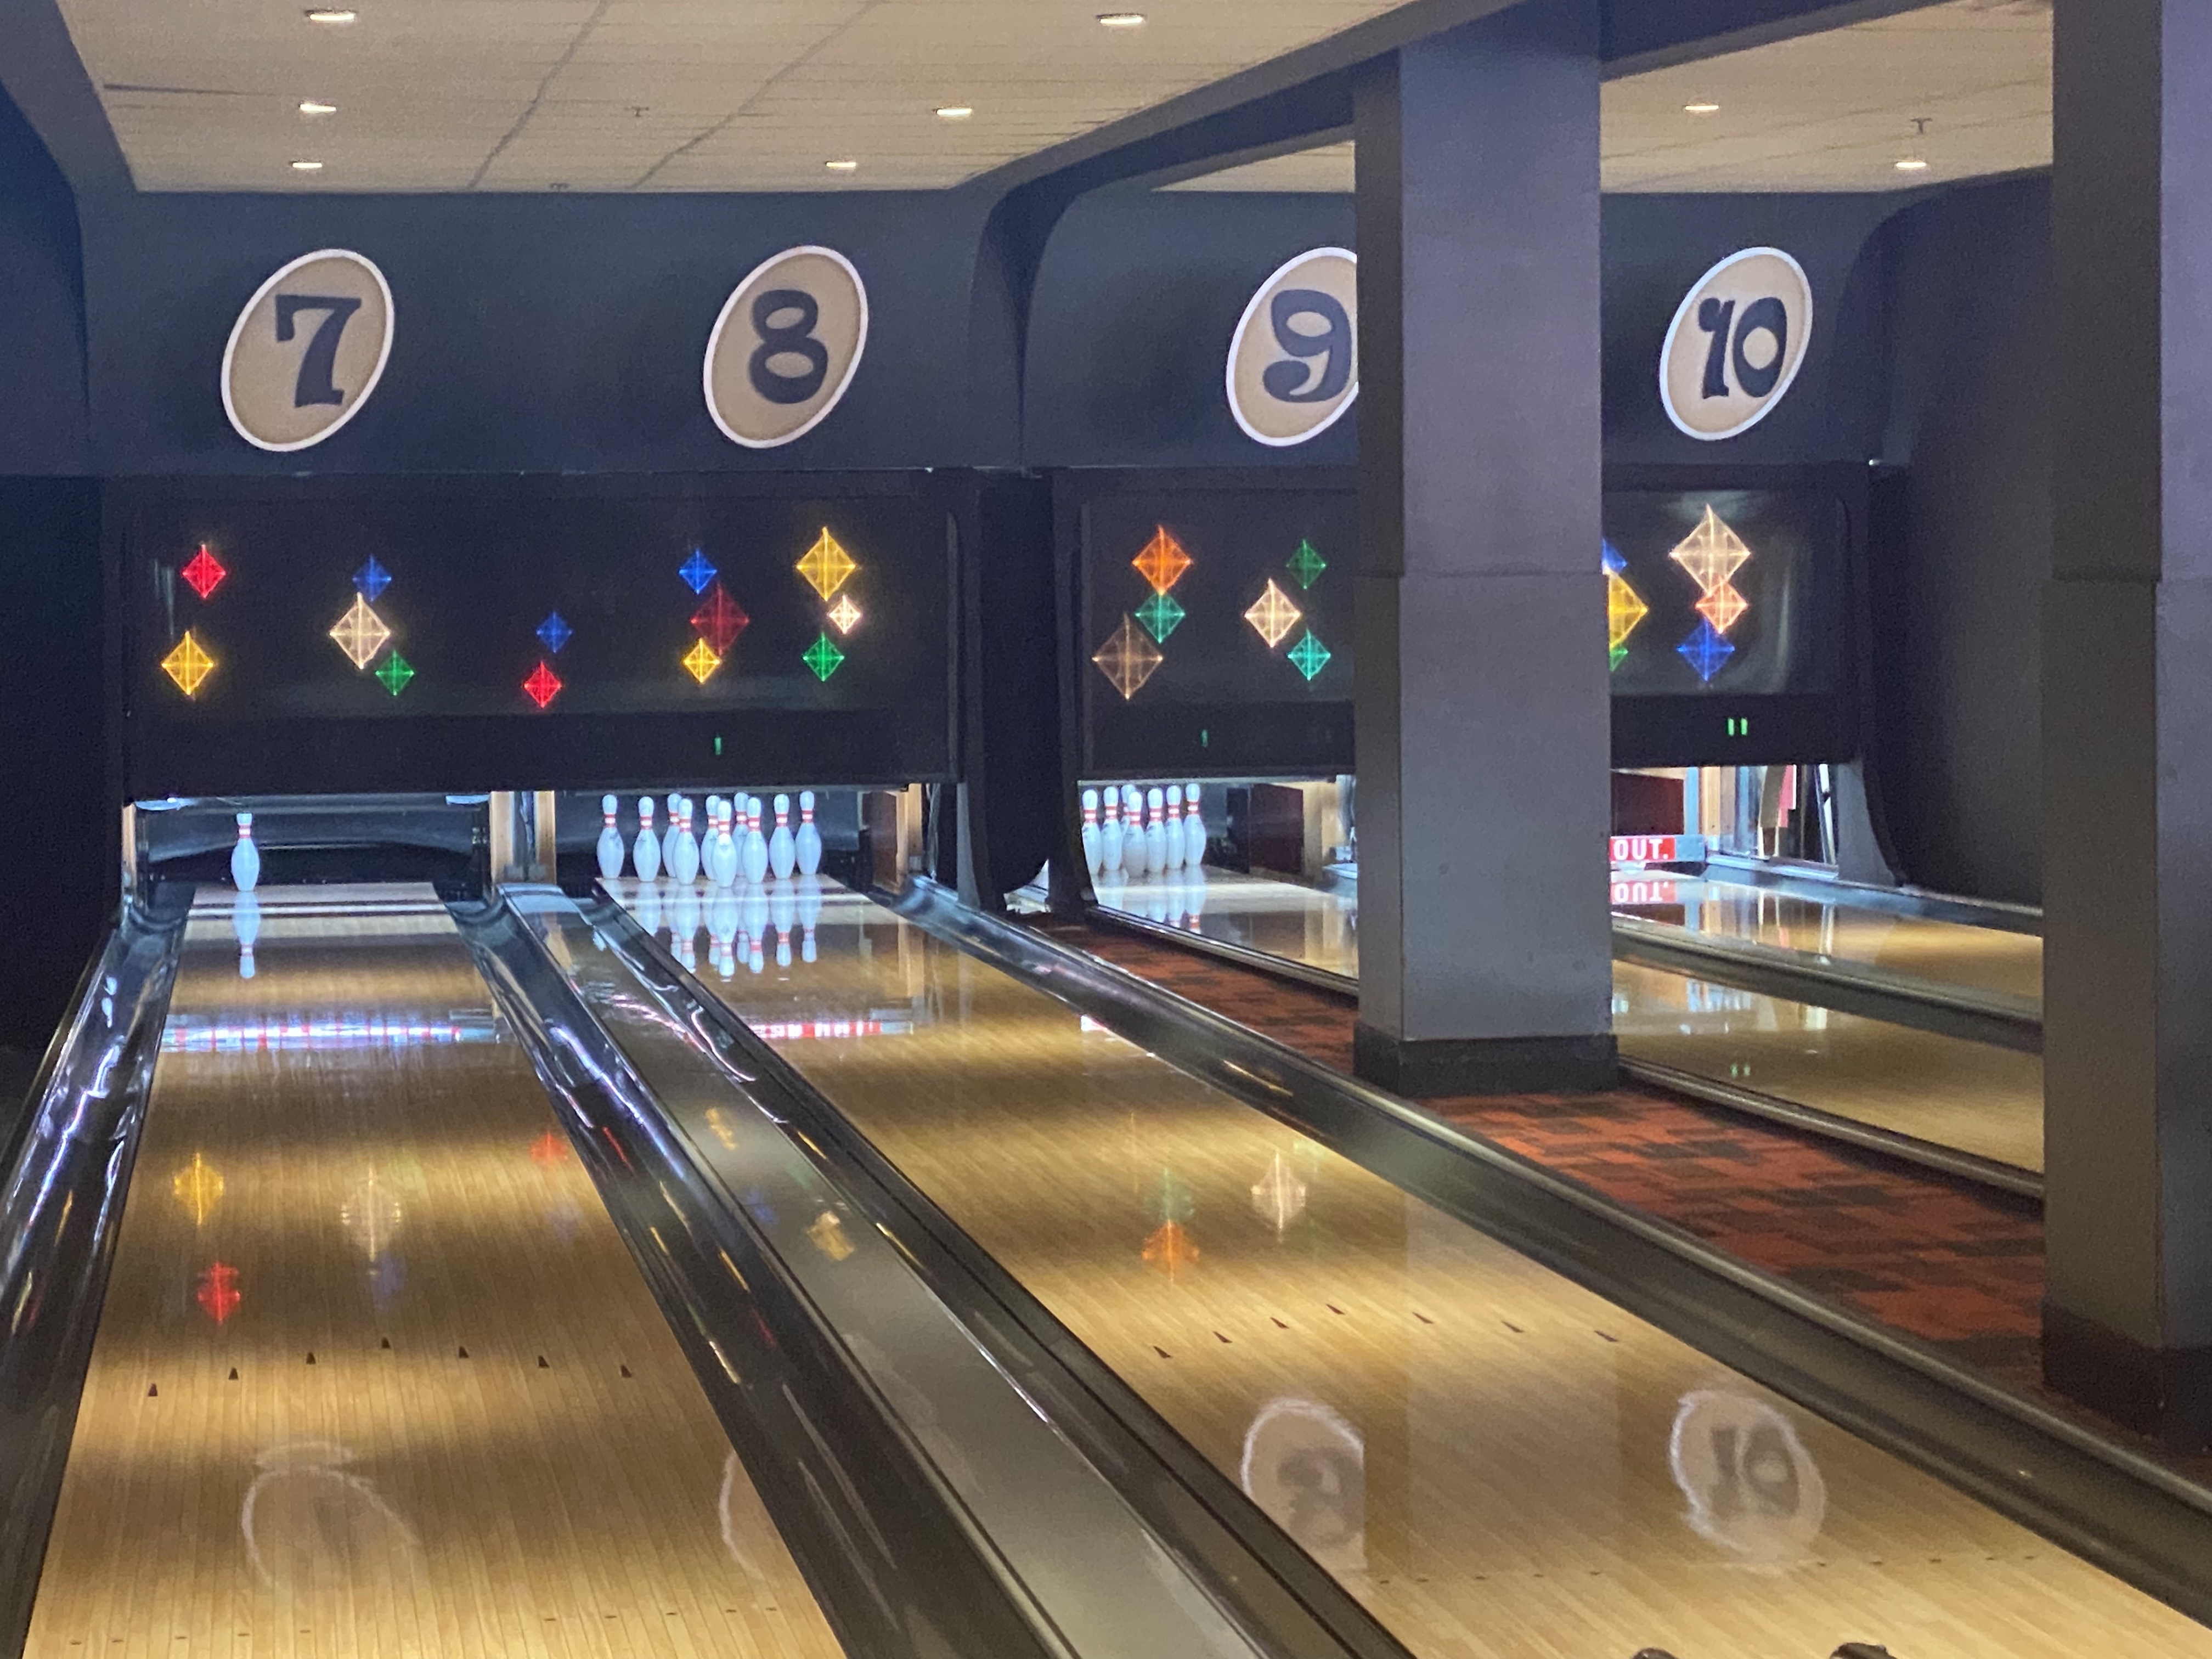 Splitsville Disney Springs: Epic Bowling, Food & Family Fun (Review)